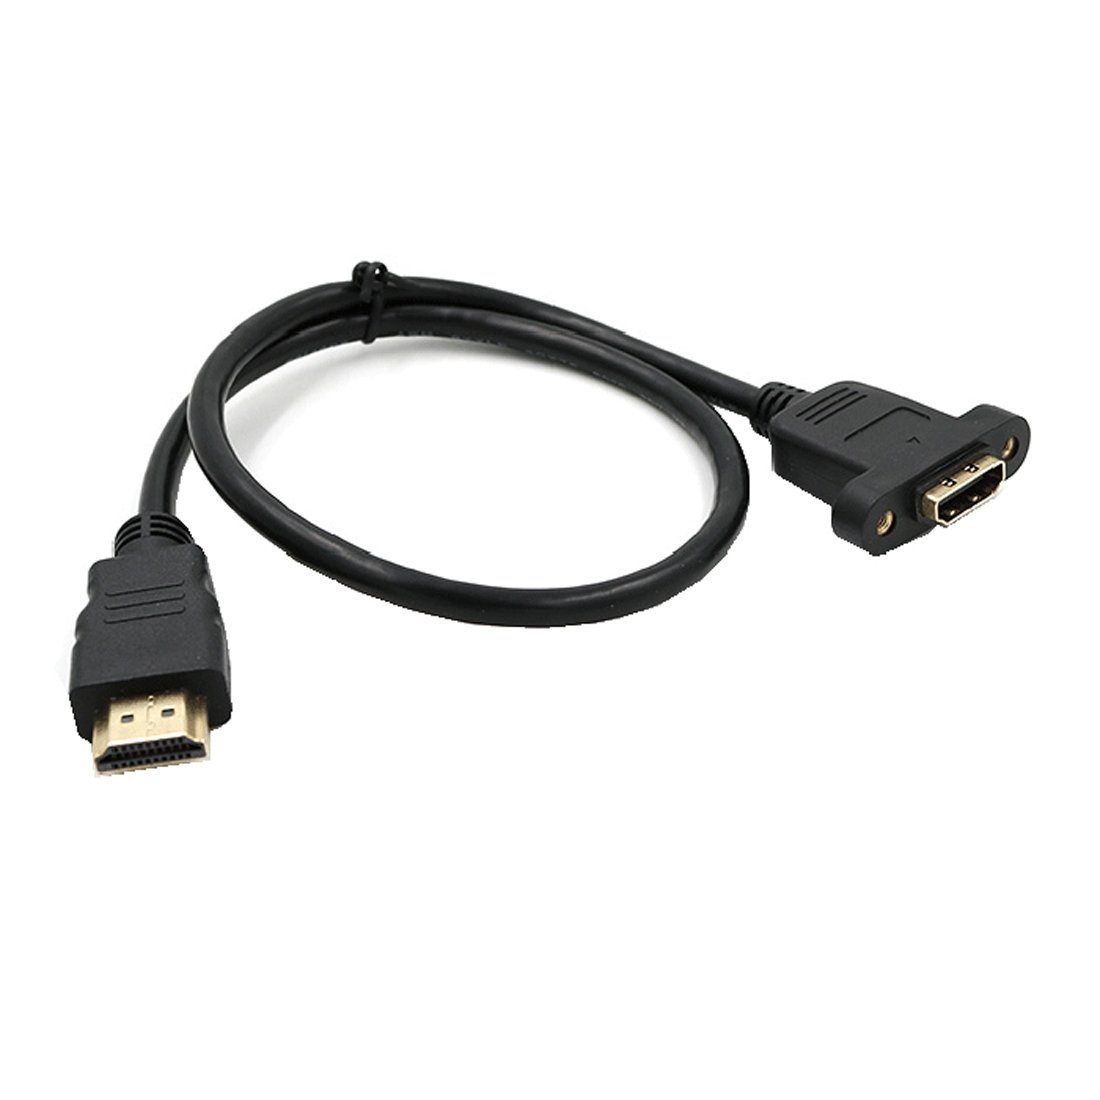 Bolwins D49 PC (30 M TV cm) Monitor HDMI Verlängerungskabel, Adapter Verlängerungskabel für zu HDMI F